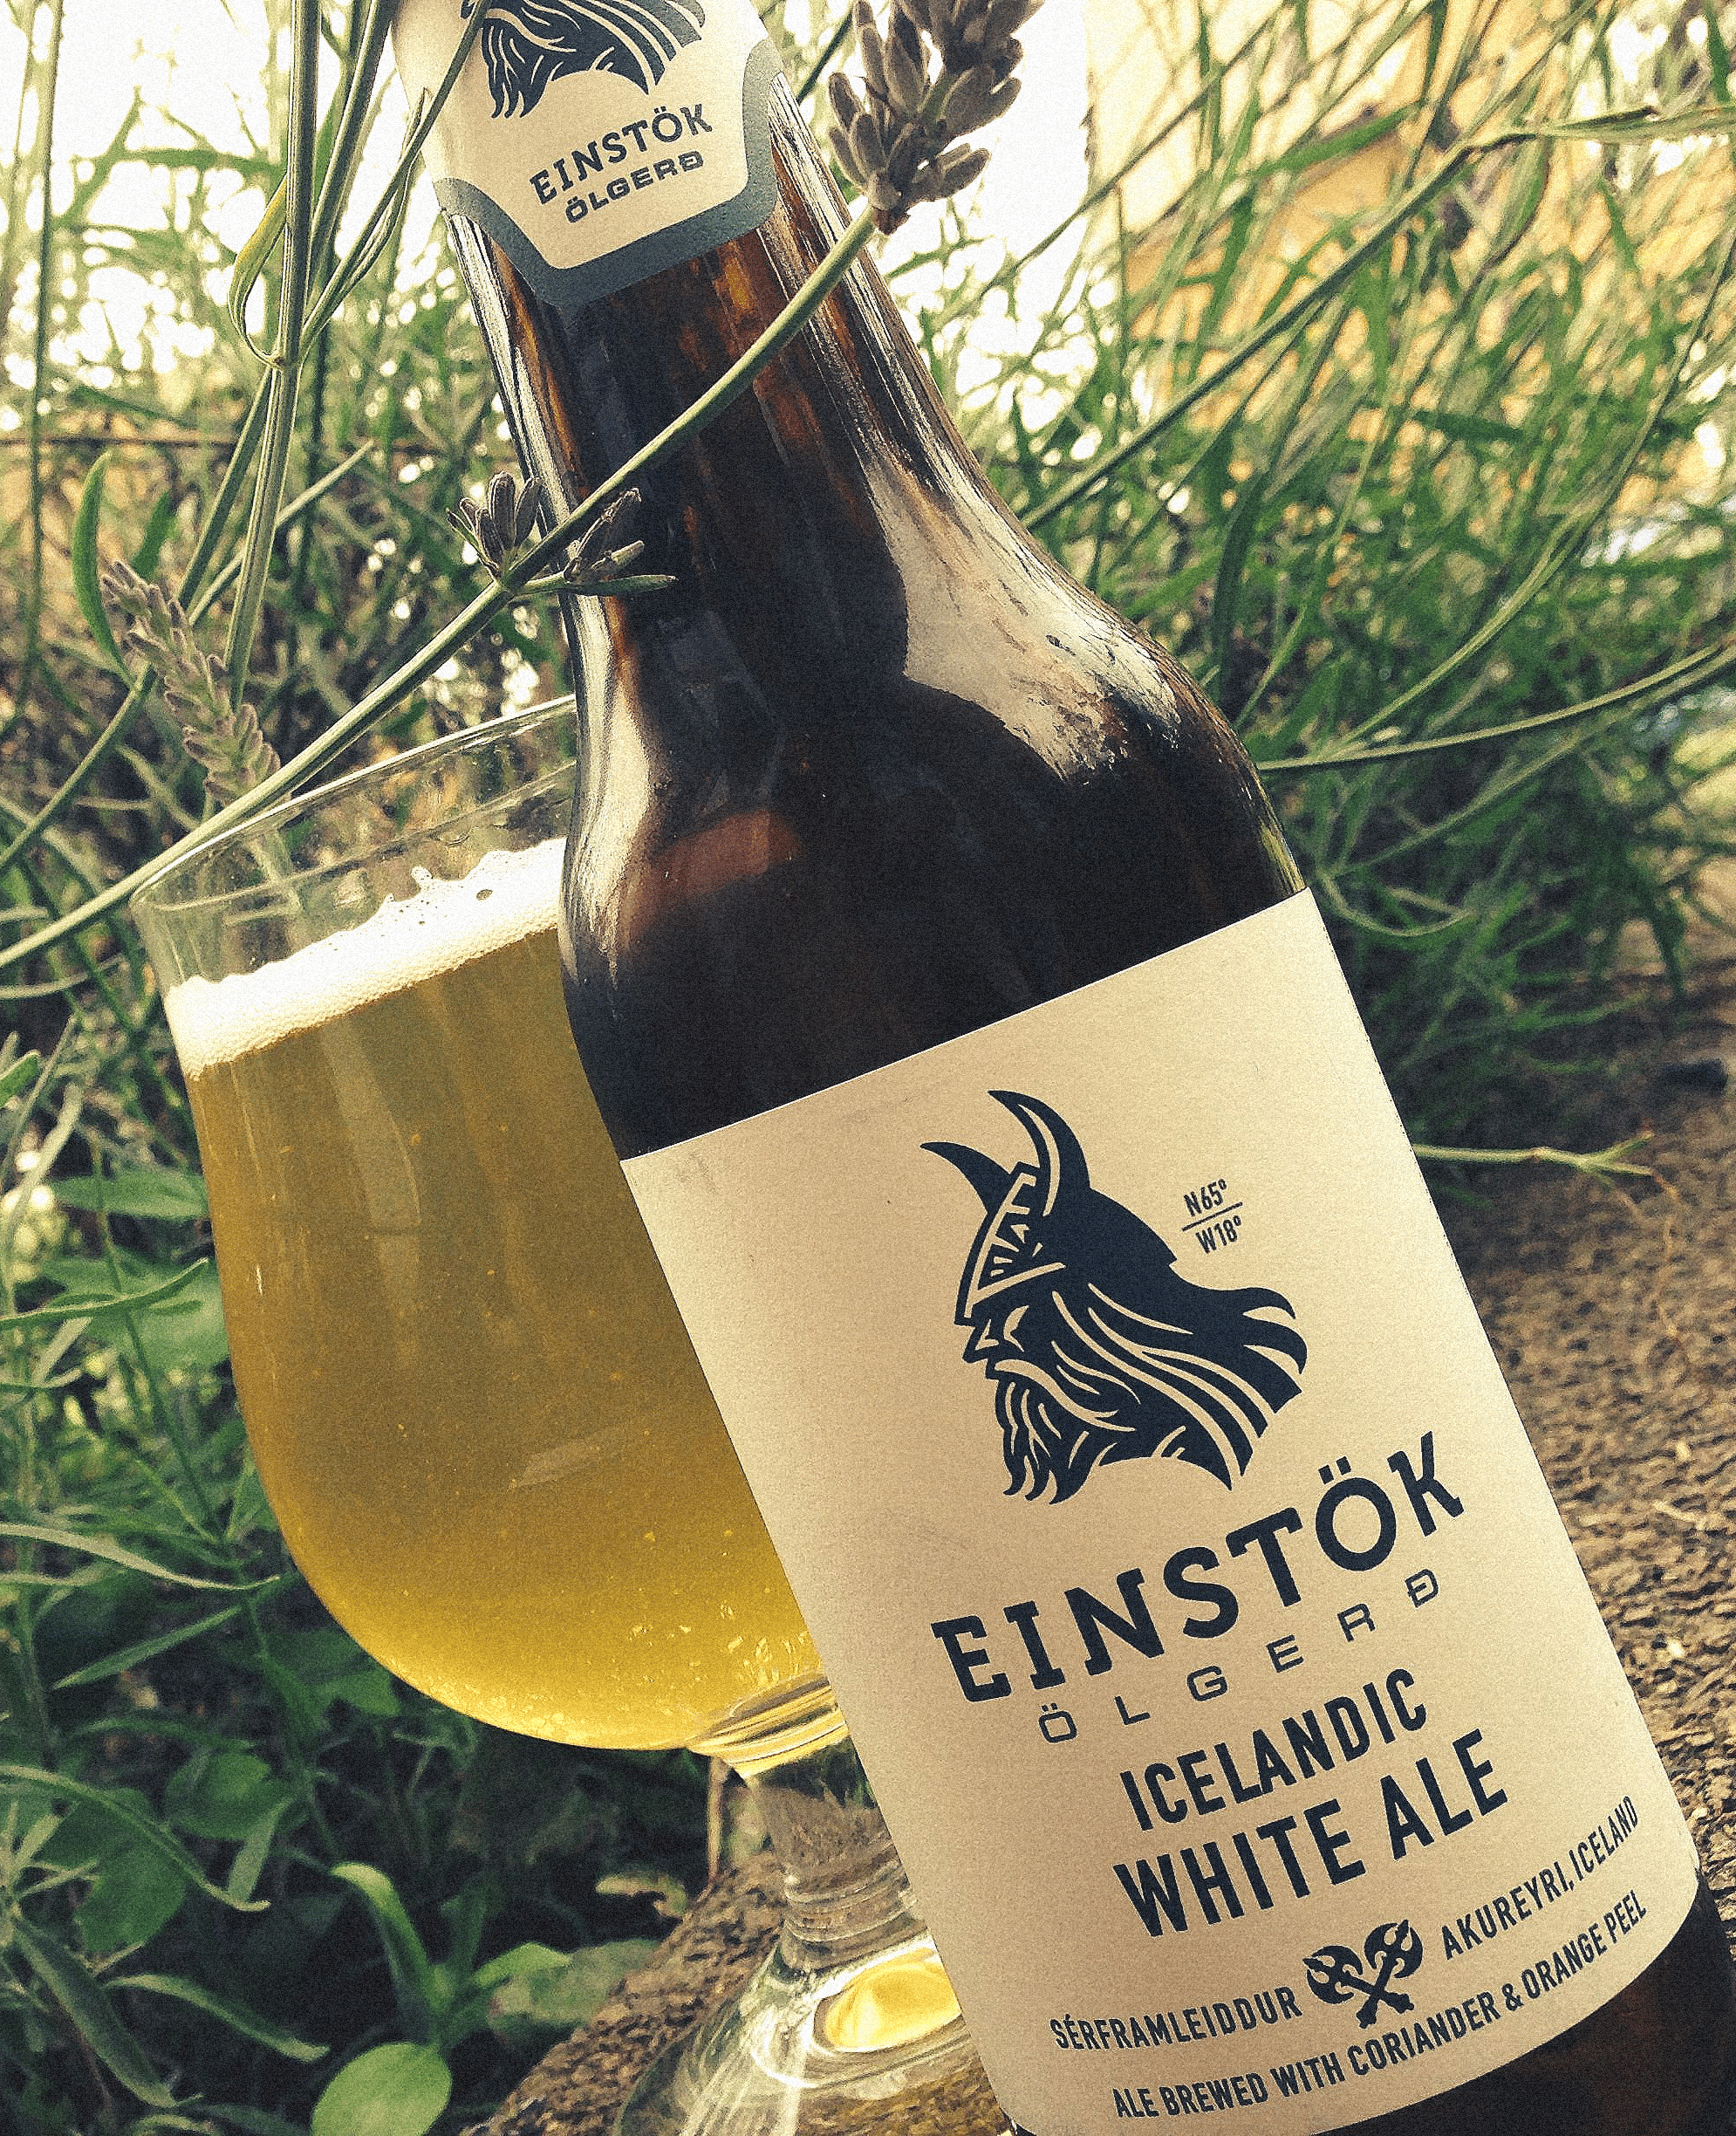 Einstock icelandic white ale